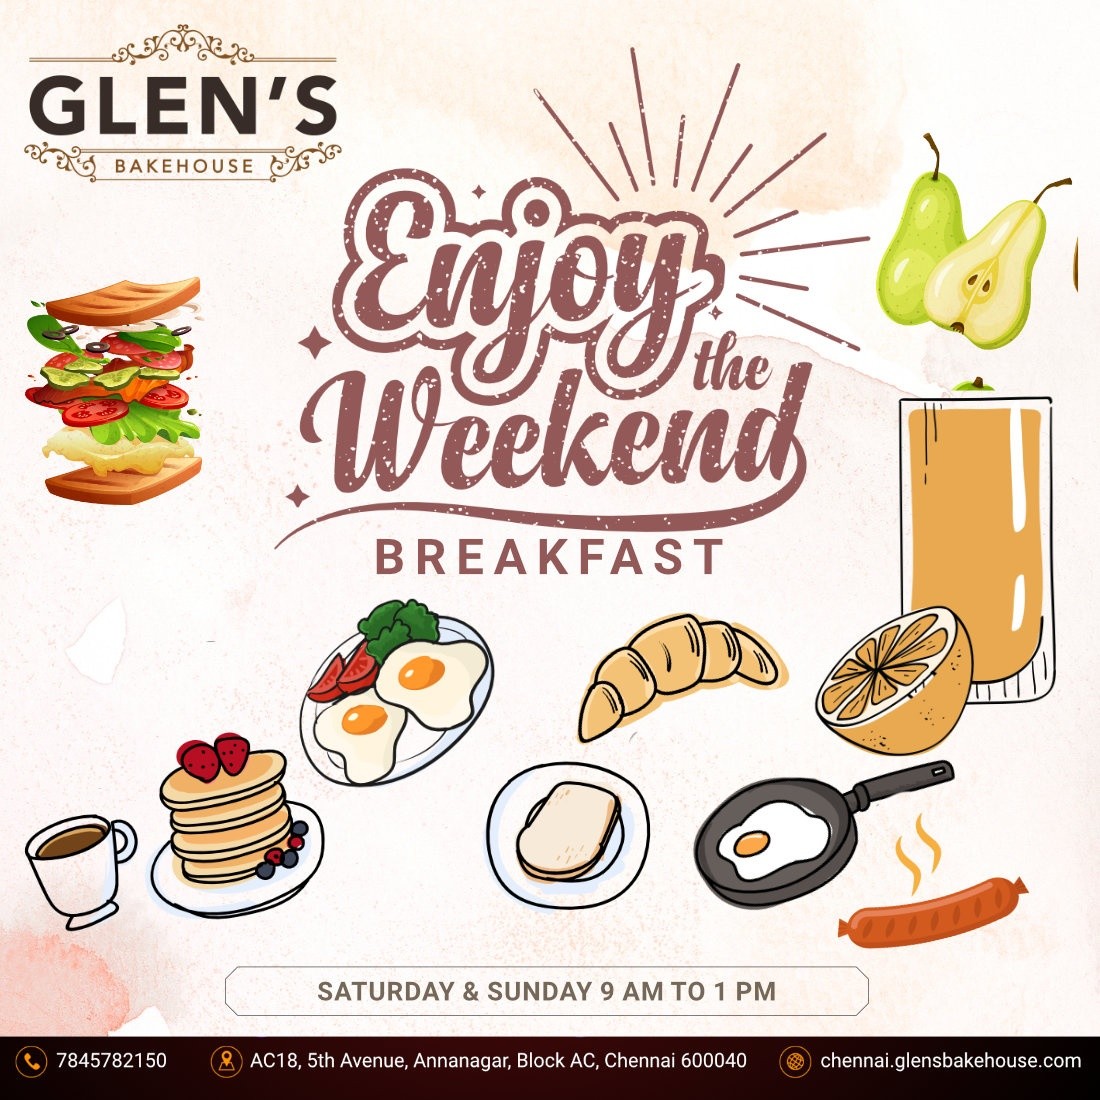 Glen's Bakehouse, Bangalore Social Media Graphics Designs Image 5